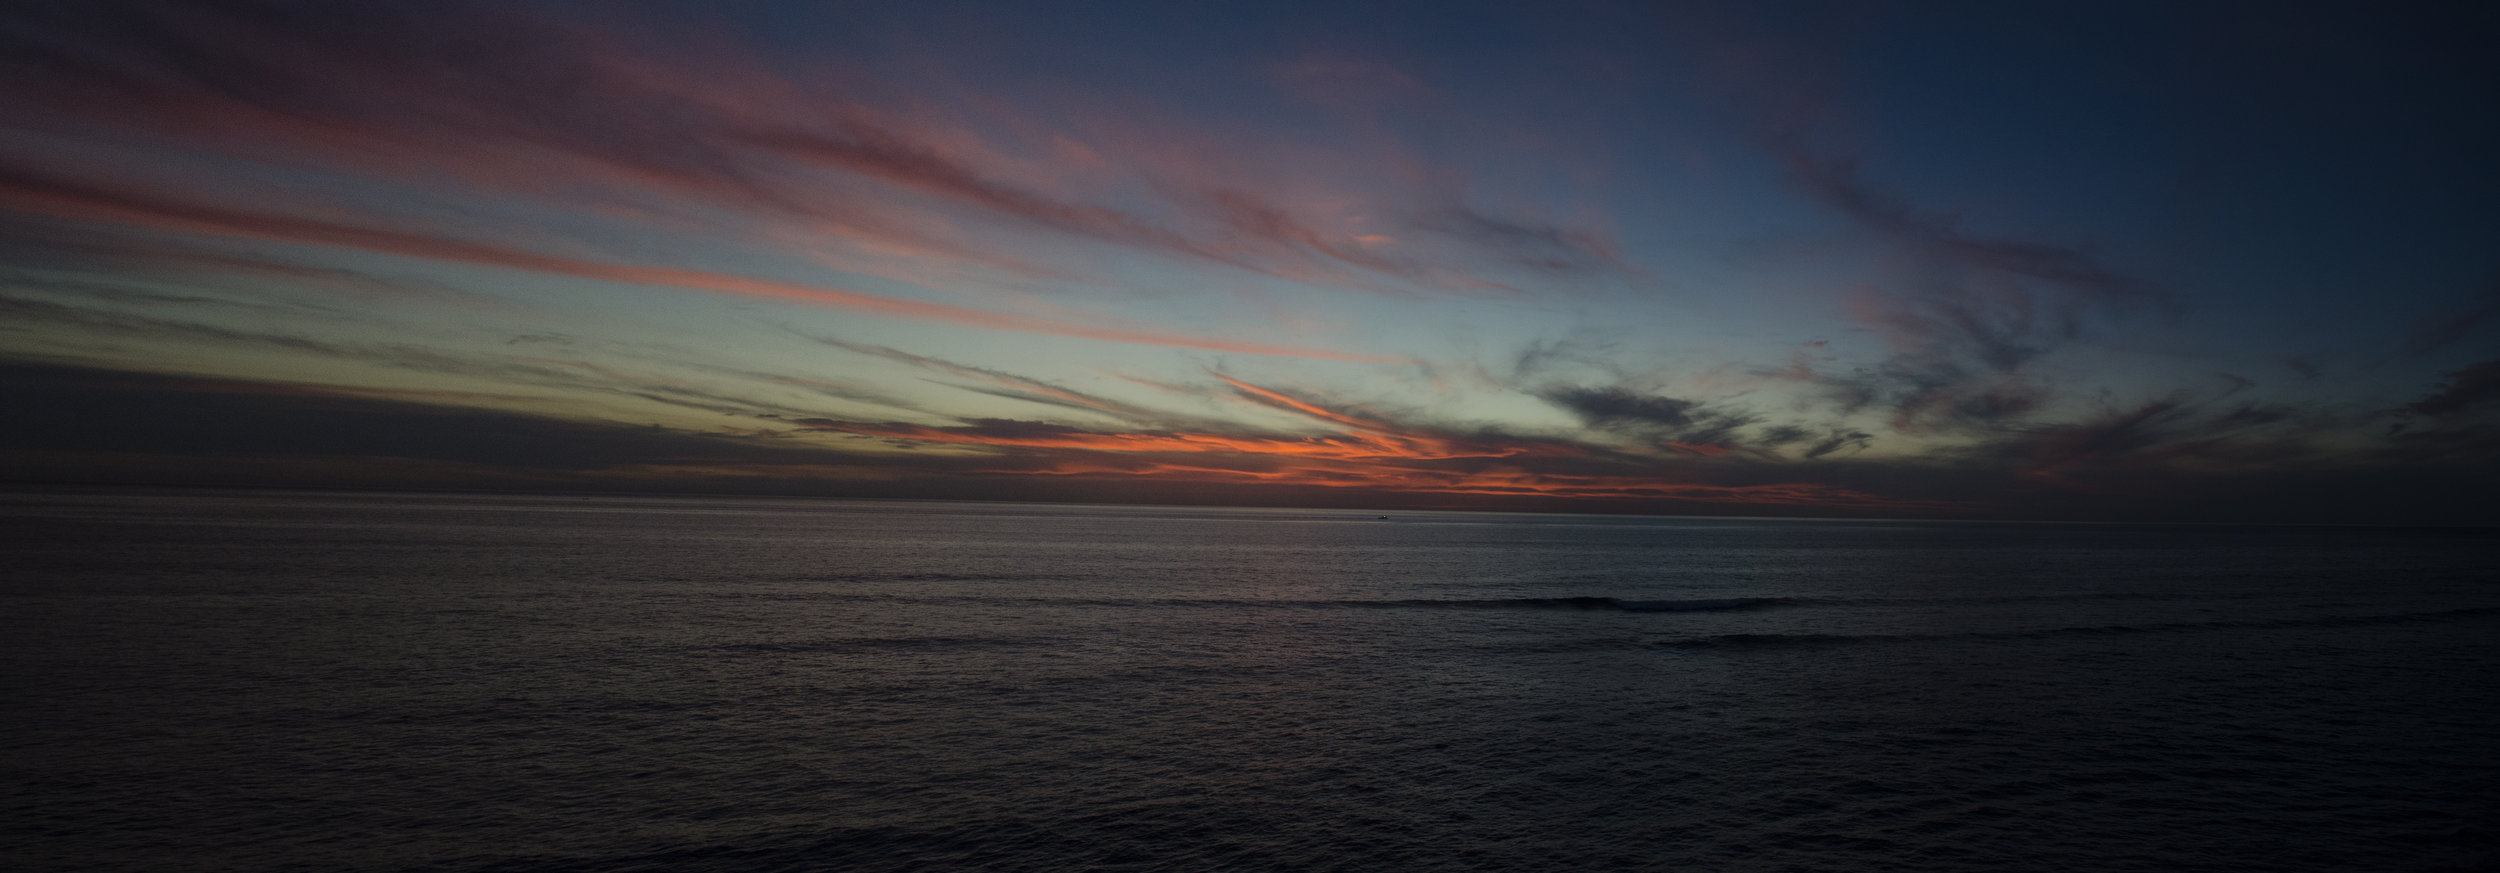 panoramic-west-coast-sunset_16856105442_o.jpg